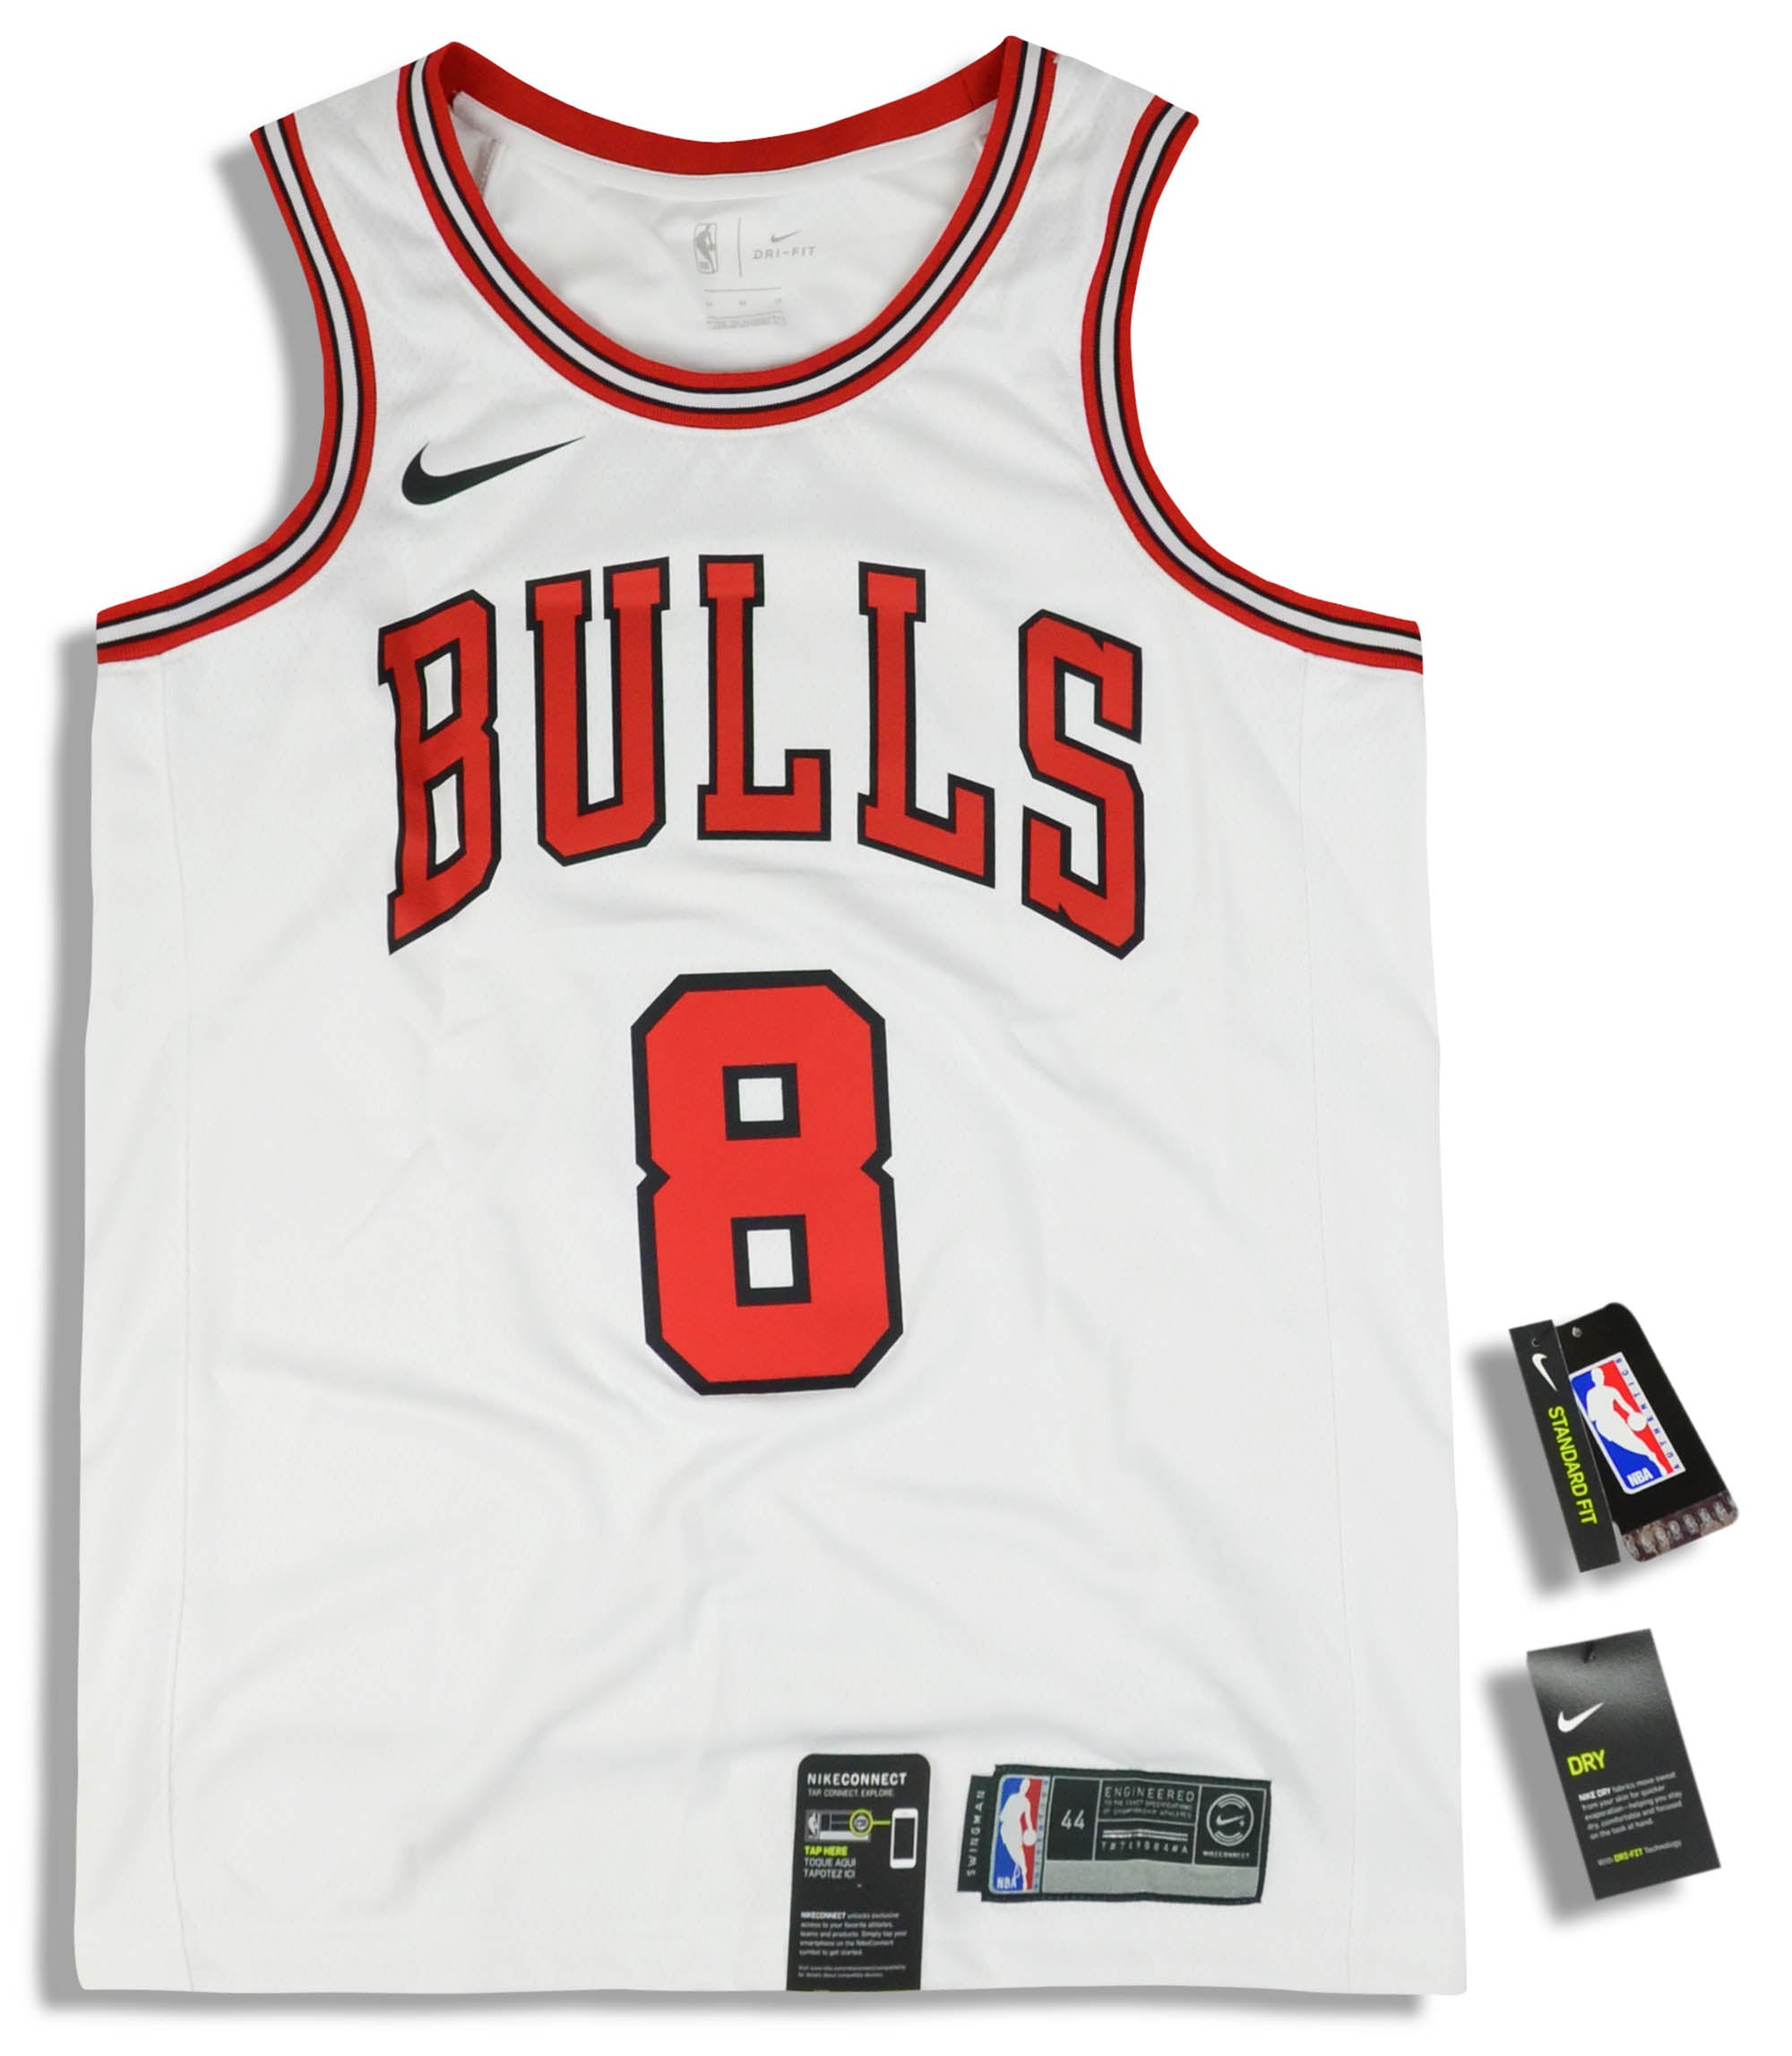 Red Nike NBA Chicago Bulls Lavine #8 Swingman Jersey